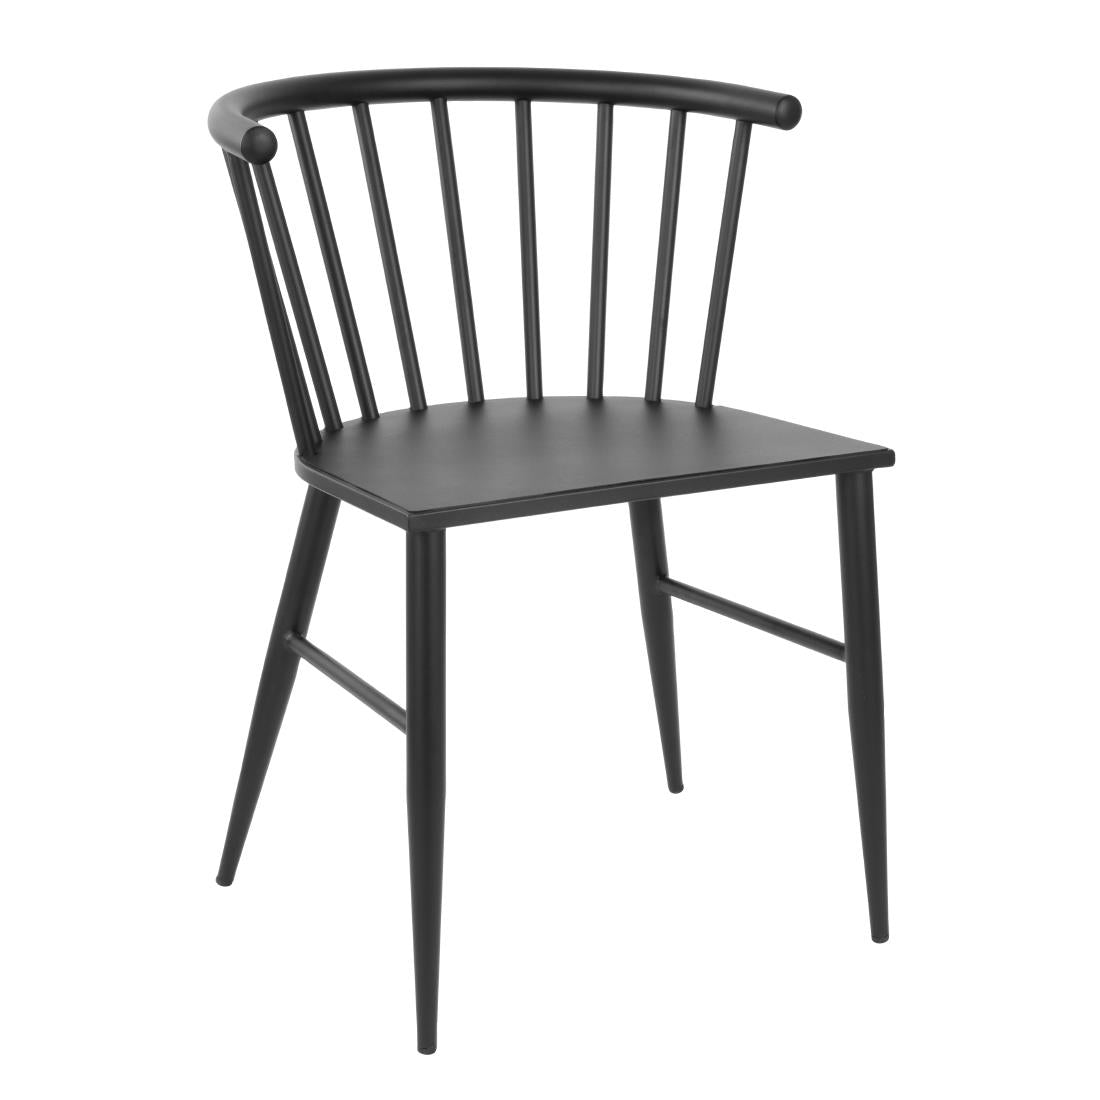 FU527 Bolero Harrowdene Black Spindle Chairs (Pack of 2)